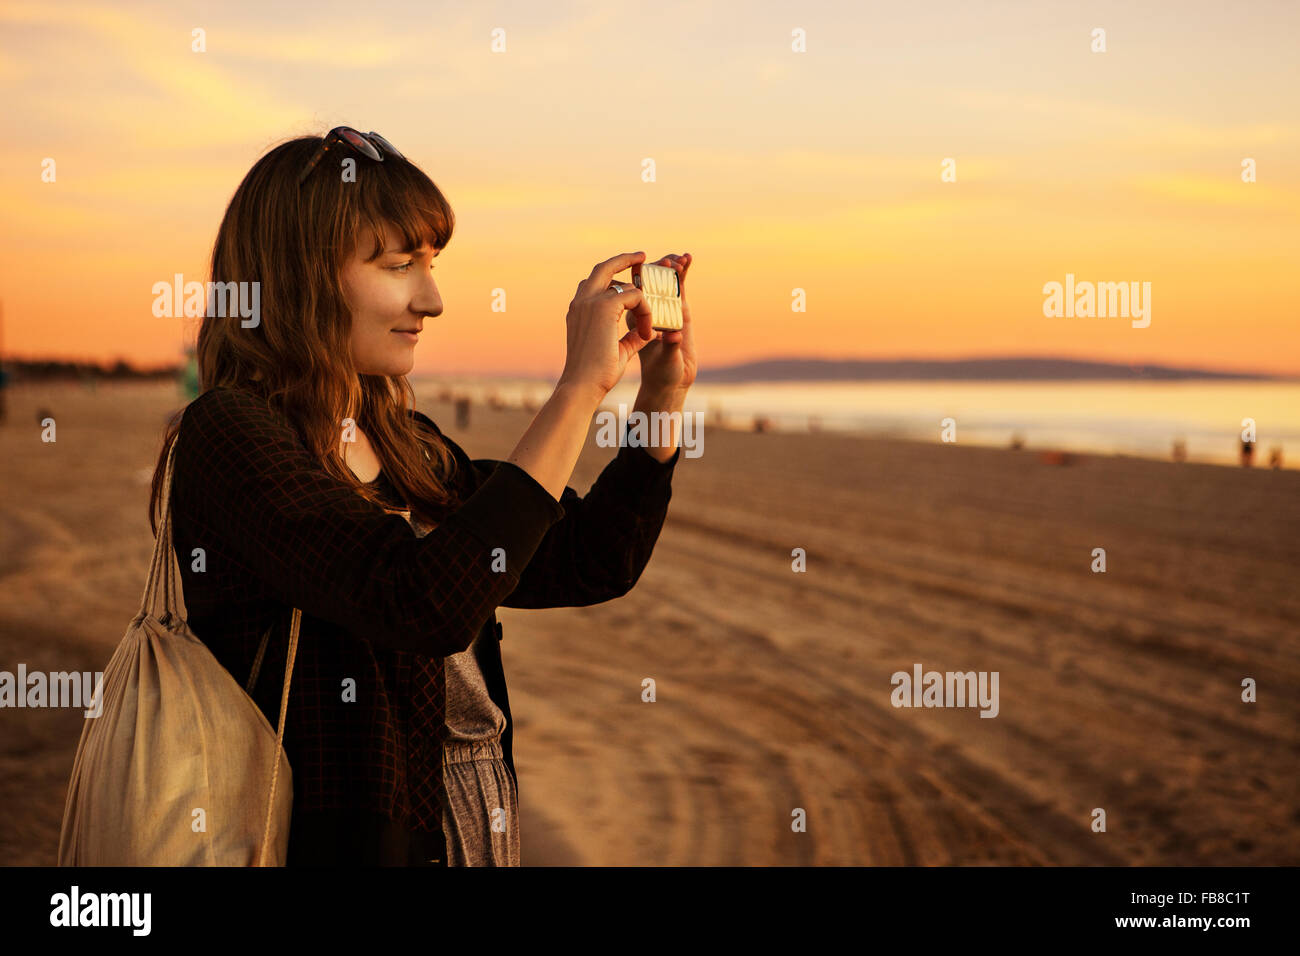 USA, California, Los Angeles, Santa Monica, Mid adult woman photographing at sunset Stock Photo